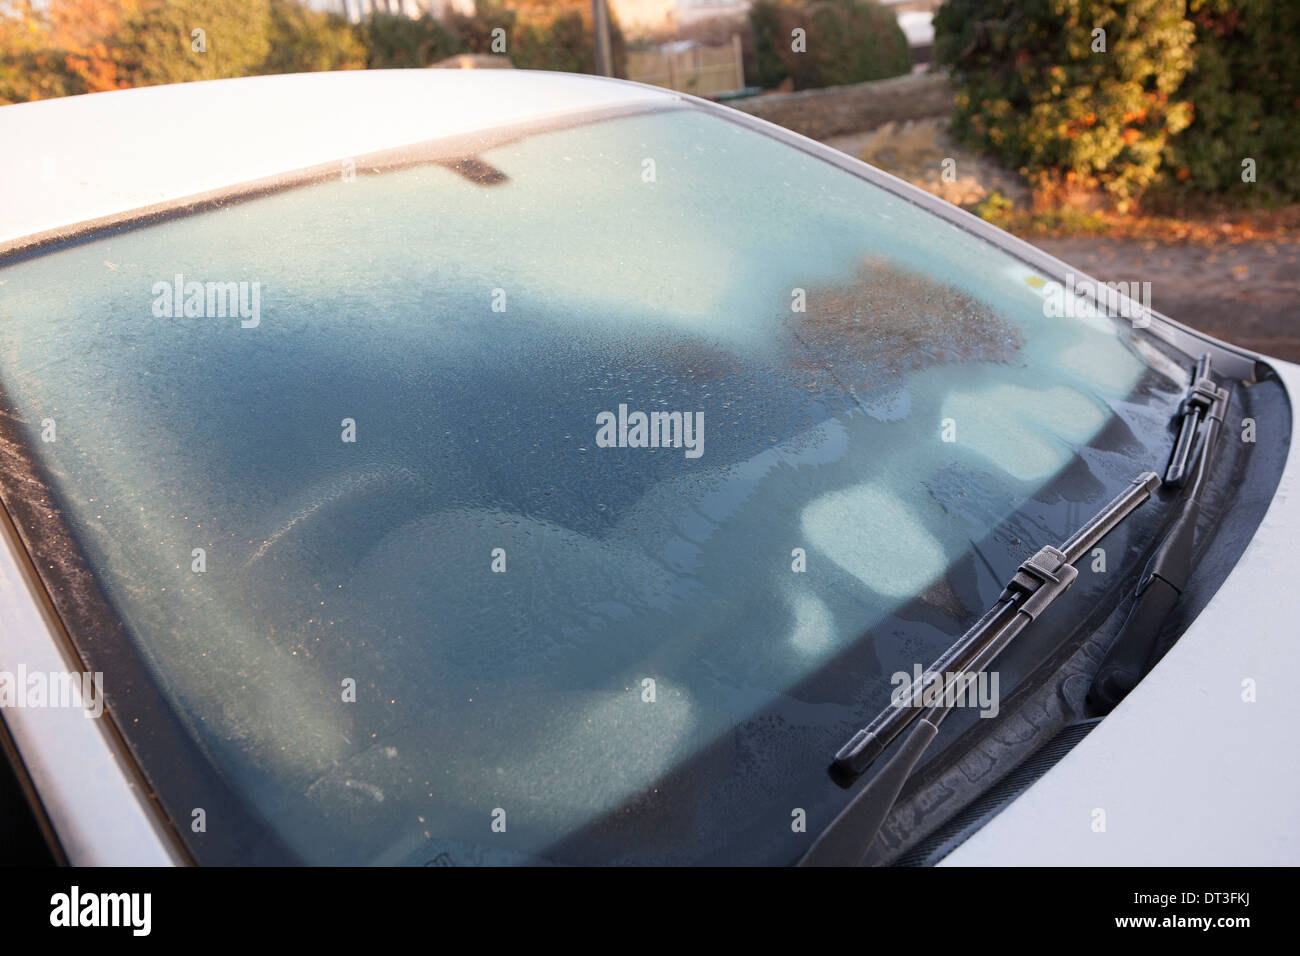 Auto Windschutzscheibe Auftauen gefroren, schmilzt Eis Stockfotografie -  Alamy